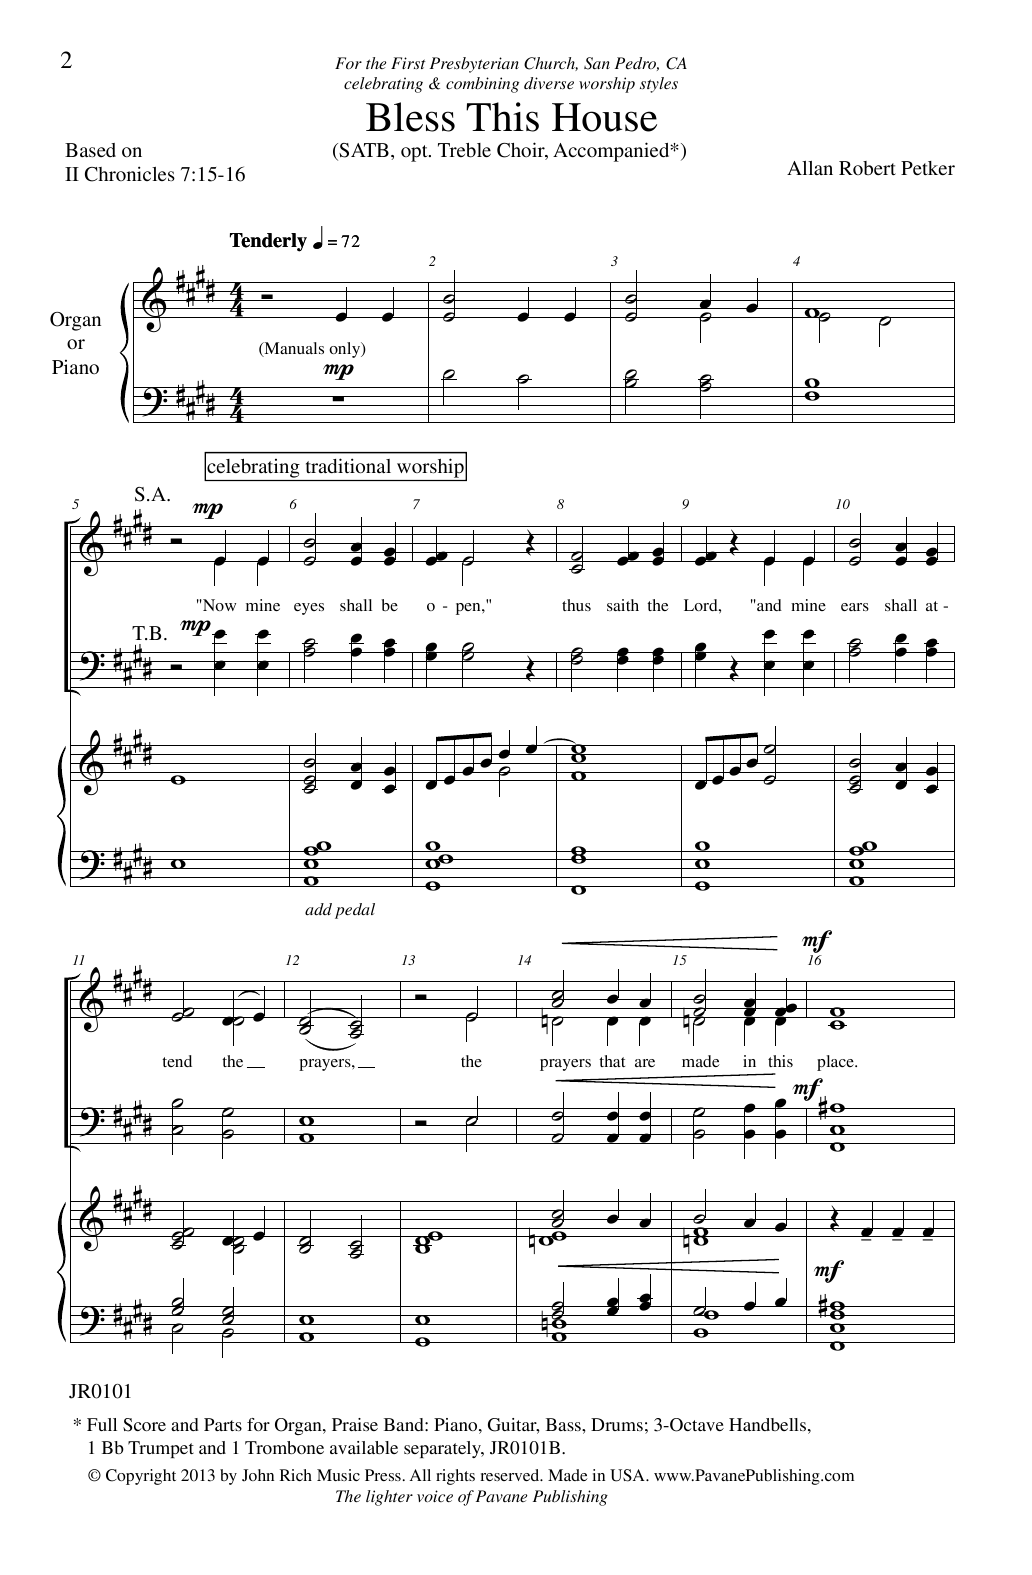 Allan Robert Petker Bless This House sheet music notes and chords arranged for SATB Choir